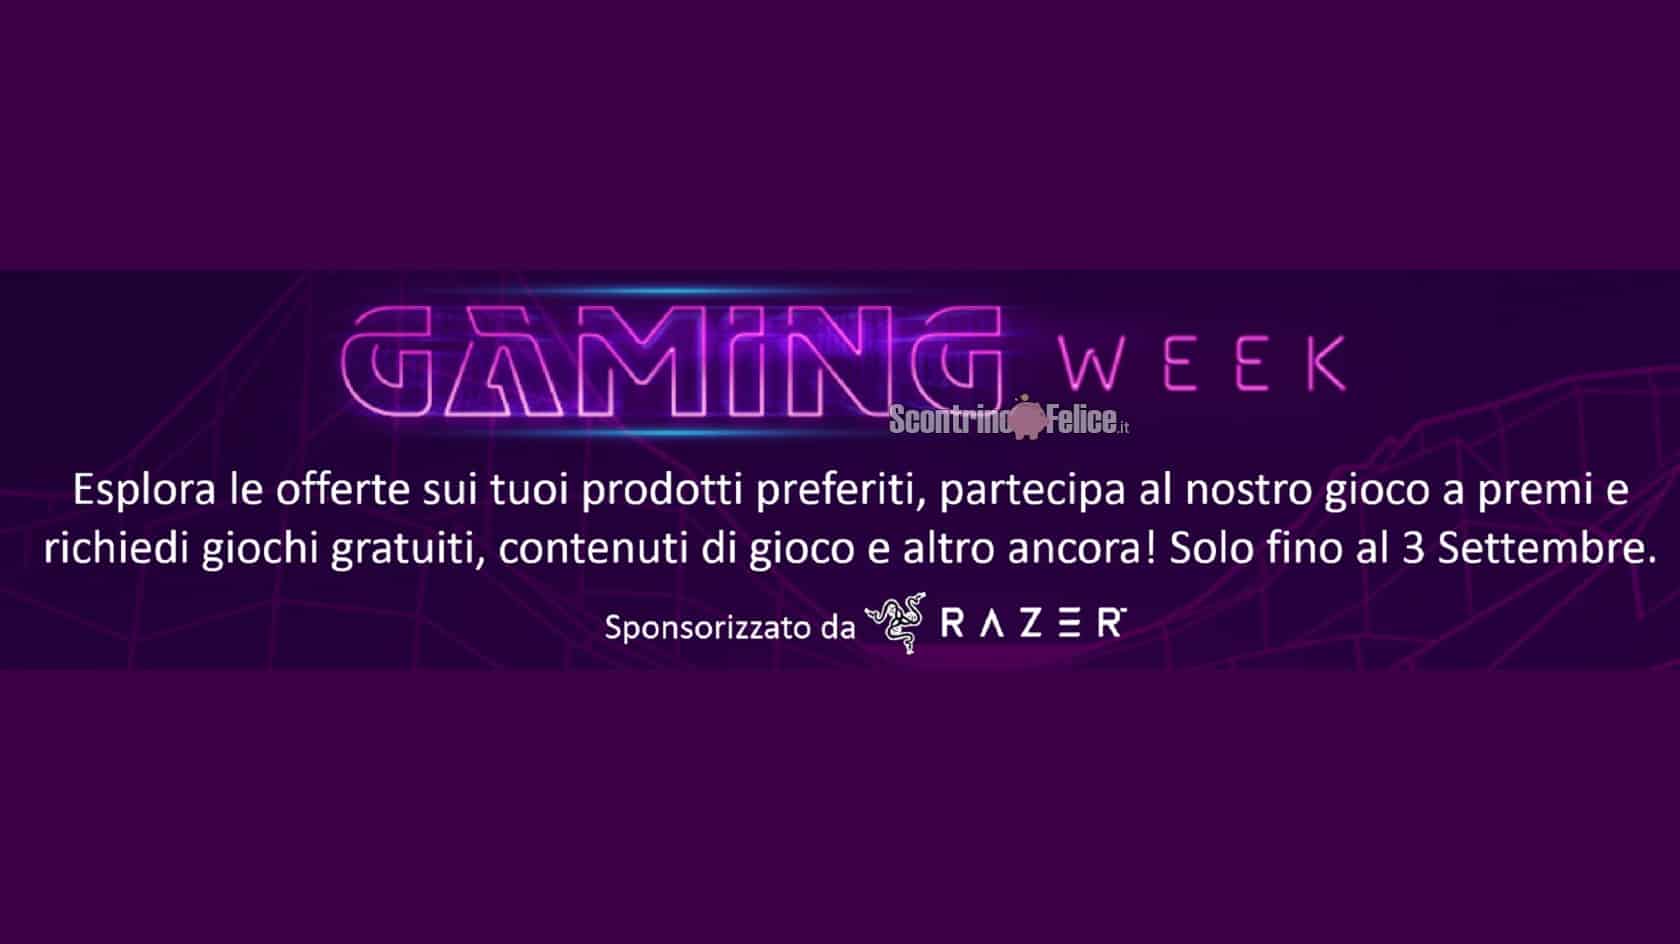 Concorso gratuito Amazon Gaming Week: vinci premi Razen